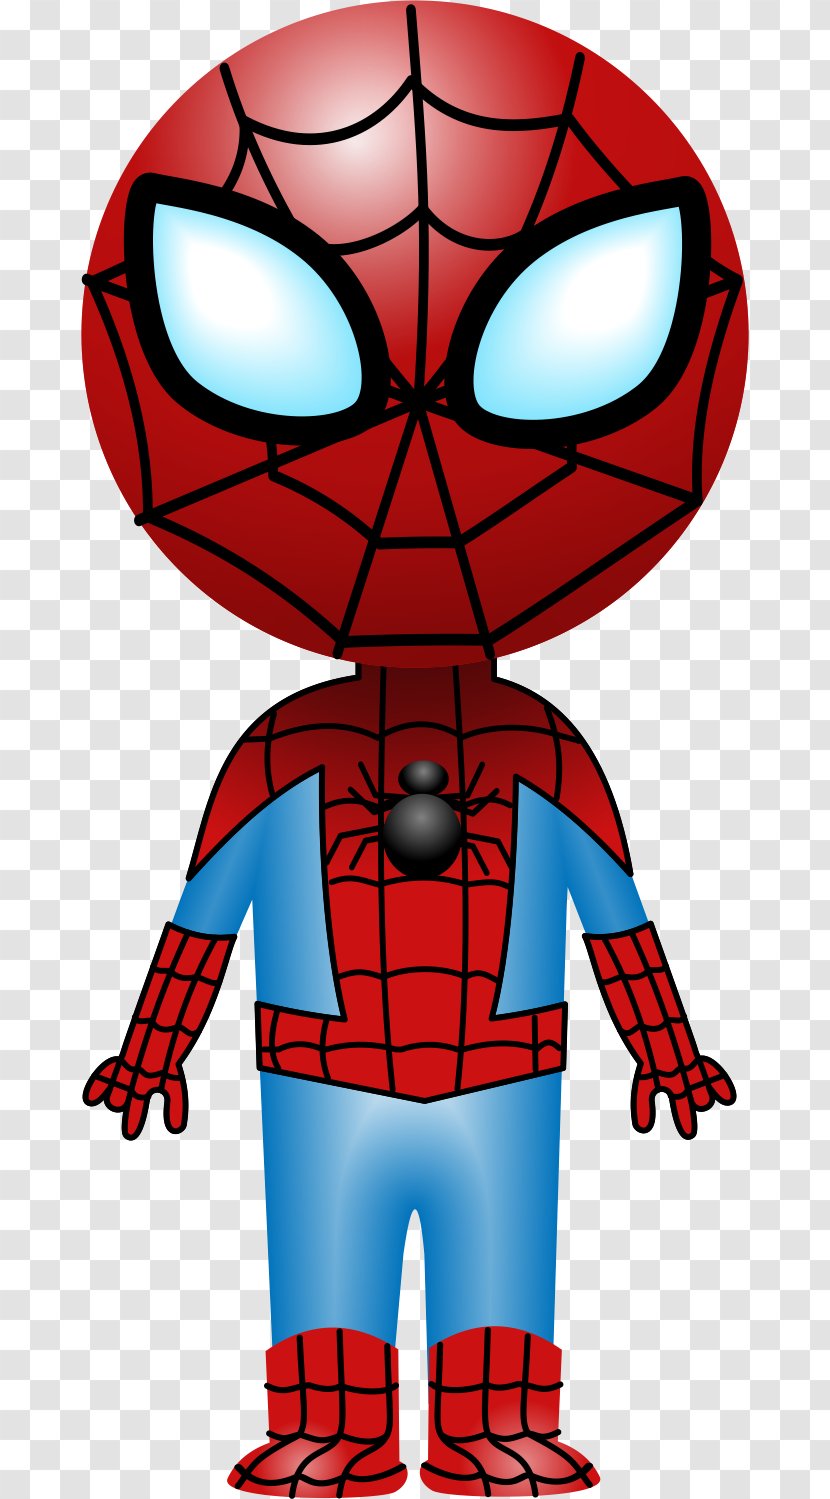 Spider-Man Superhero Image - Artwork - Spiderman Transparent PNG